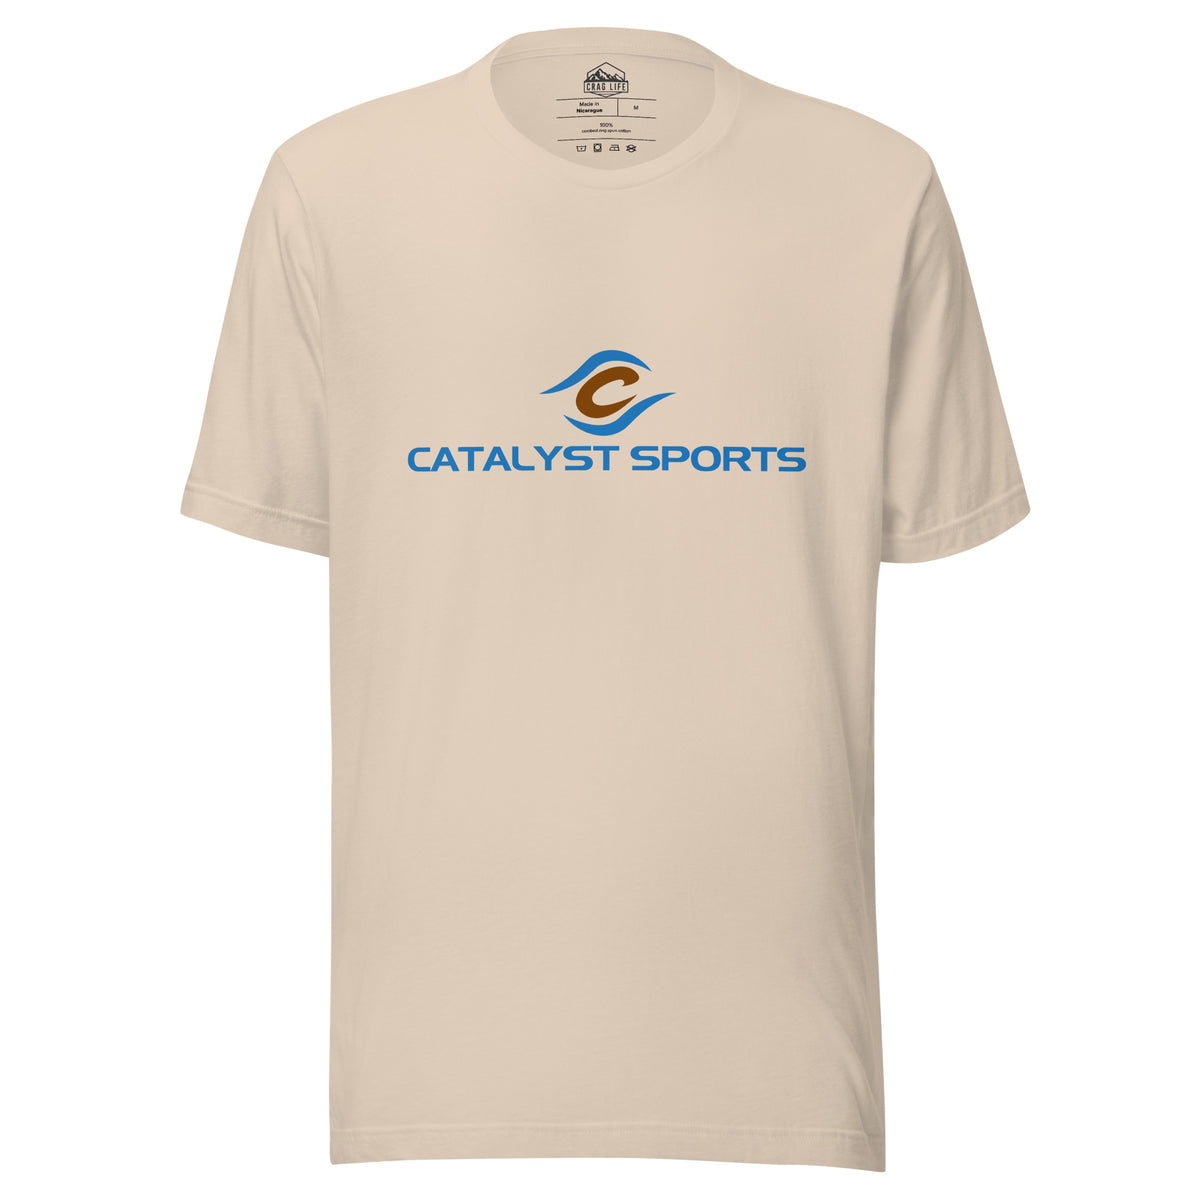 Shop Sports T-Shirts